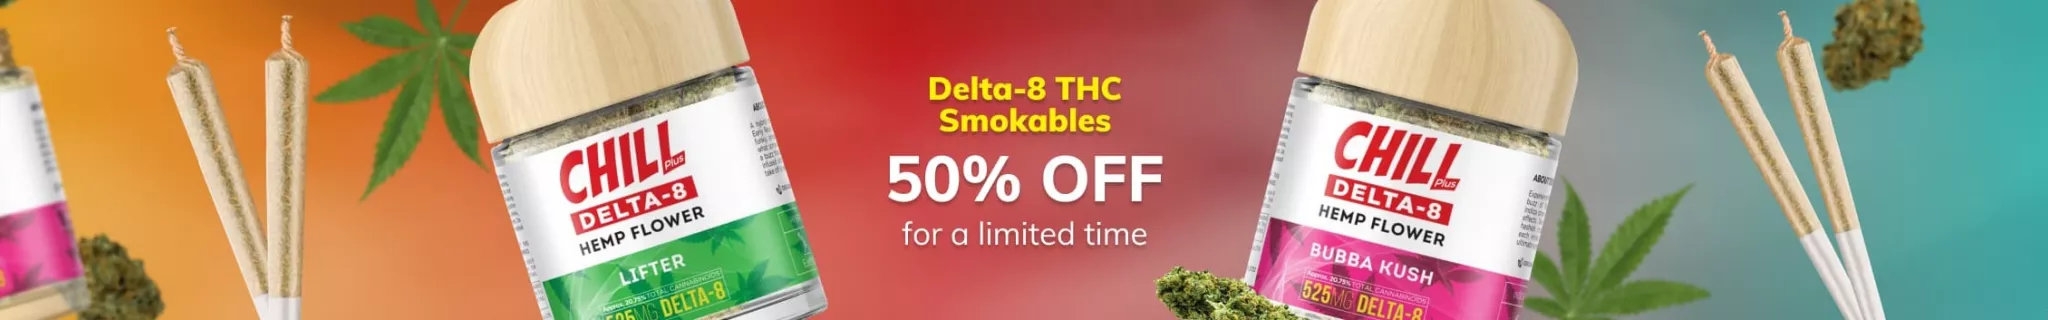 Delta-8 THC Smokables 50% OFF 